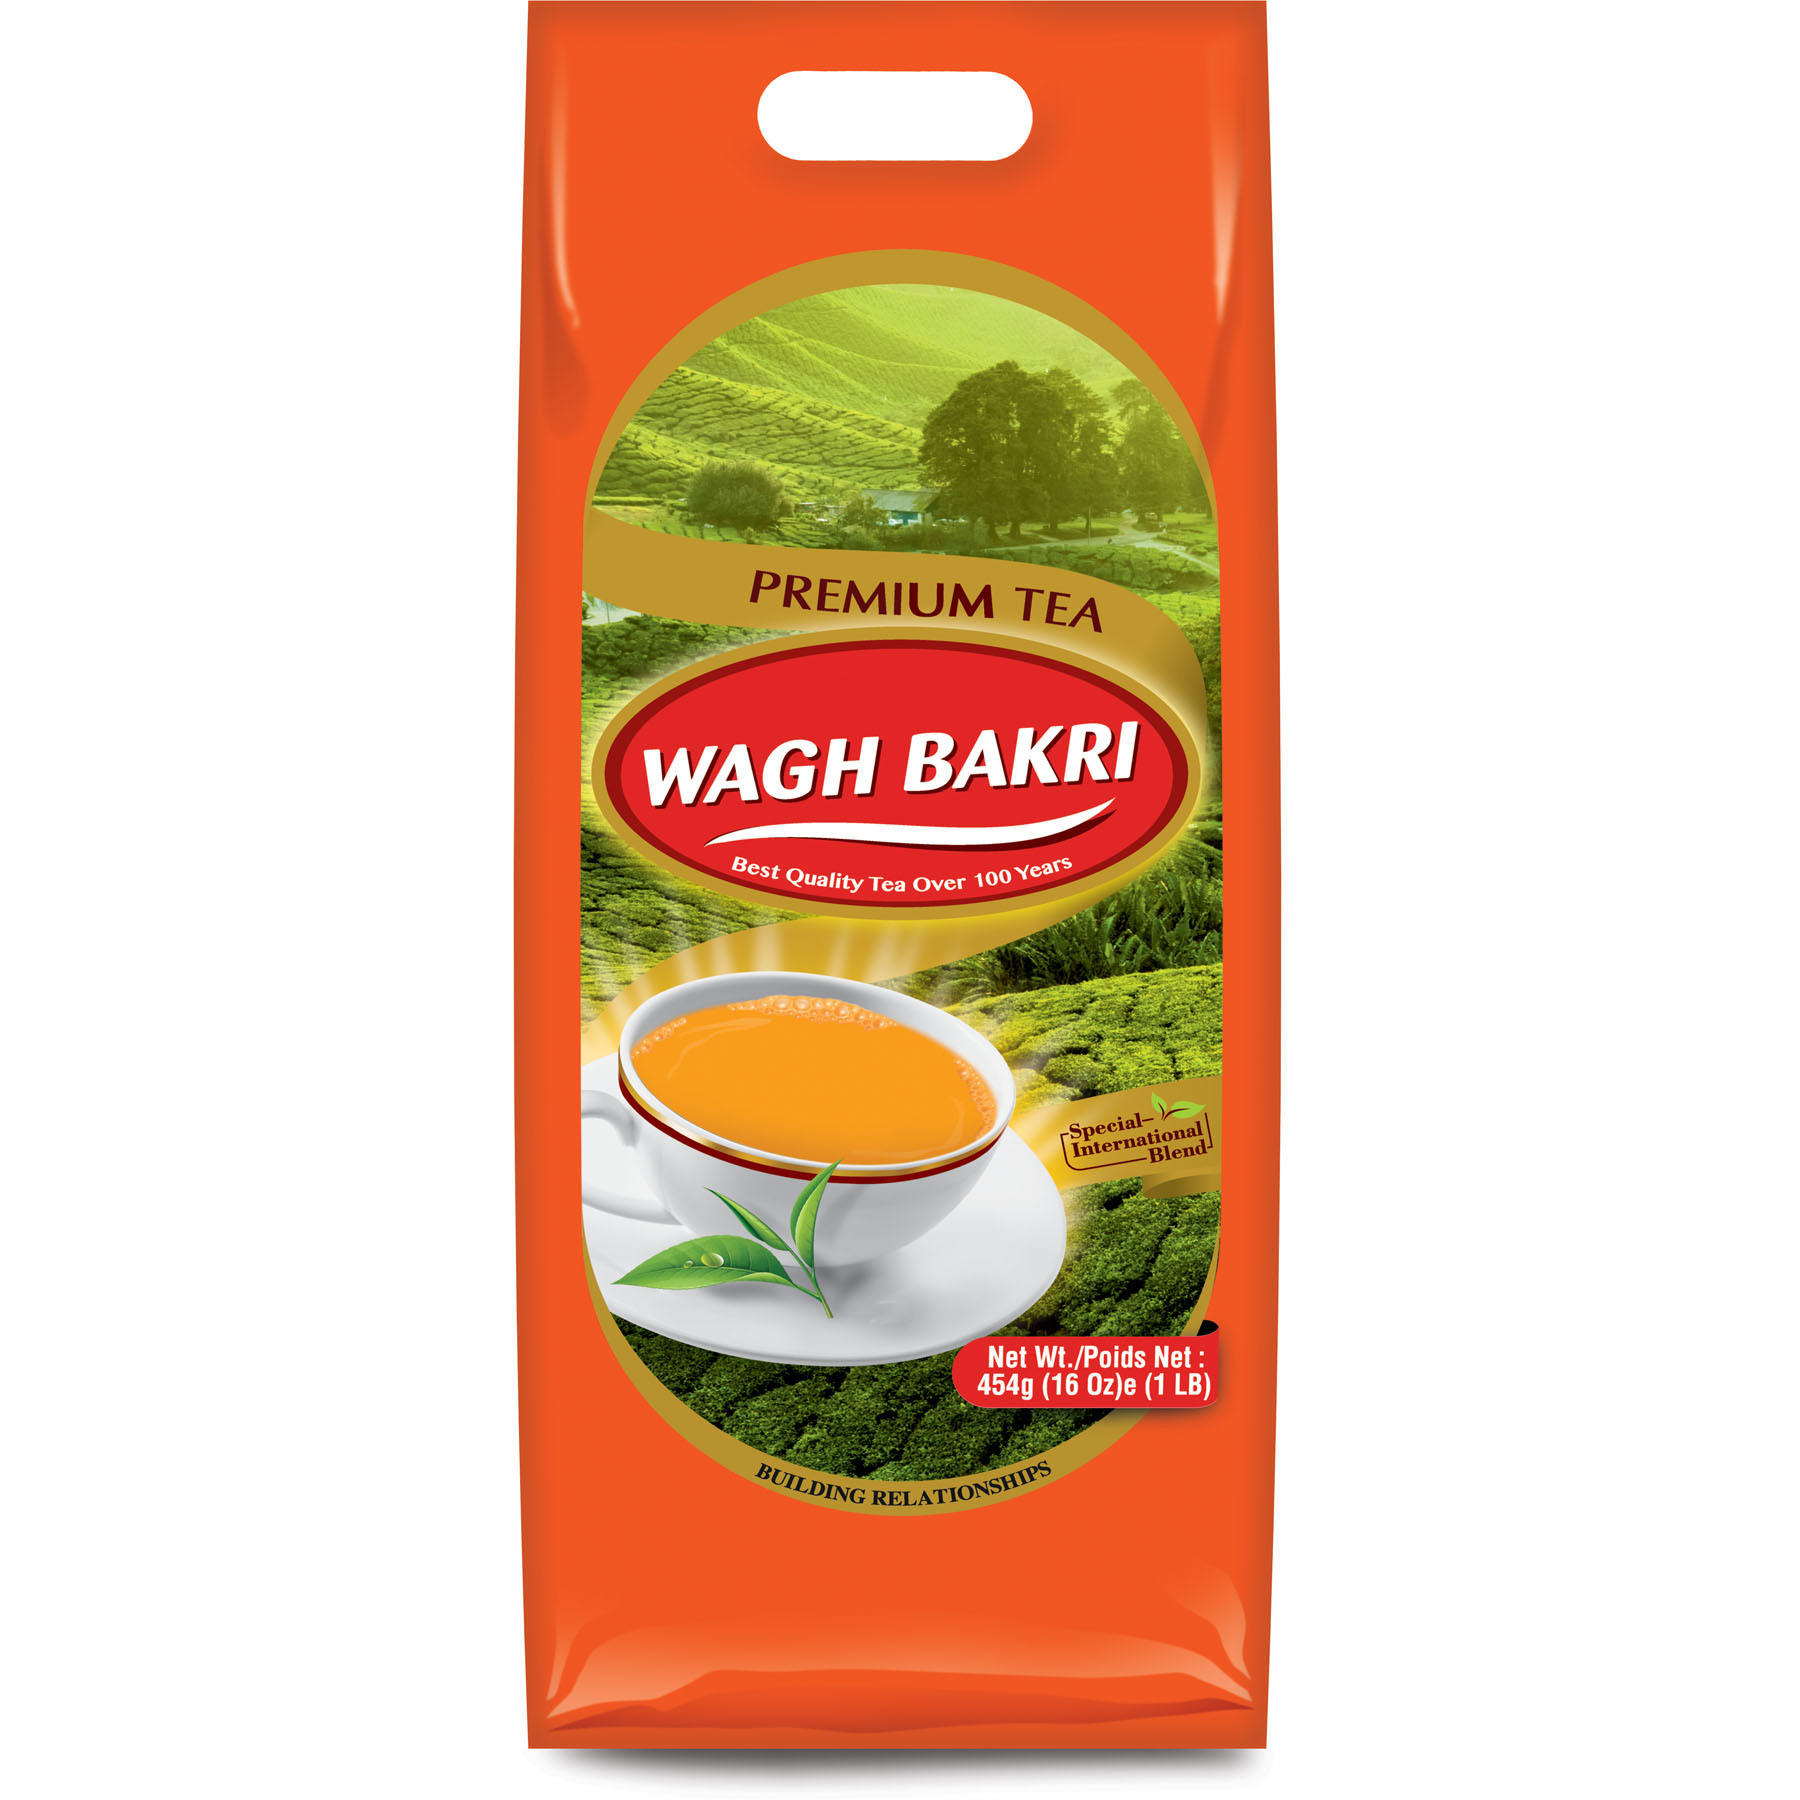 Wagh Bakri Premium Tea - 454 Gm (1 Lb)